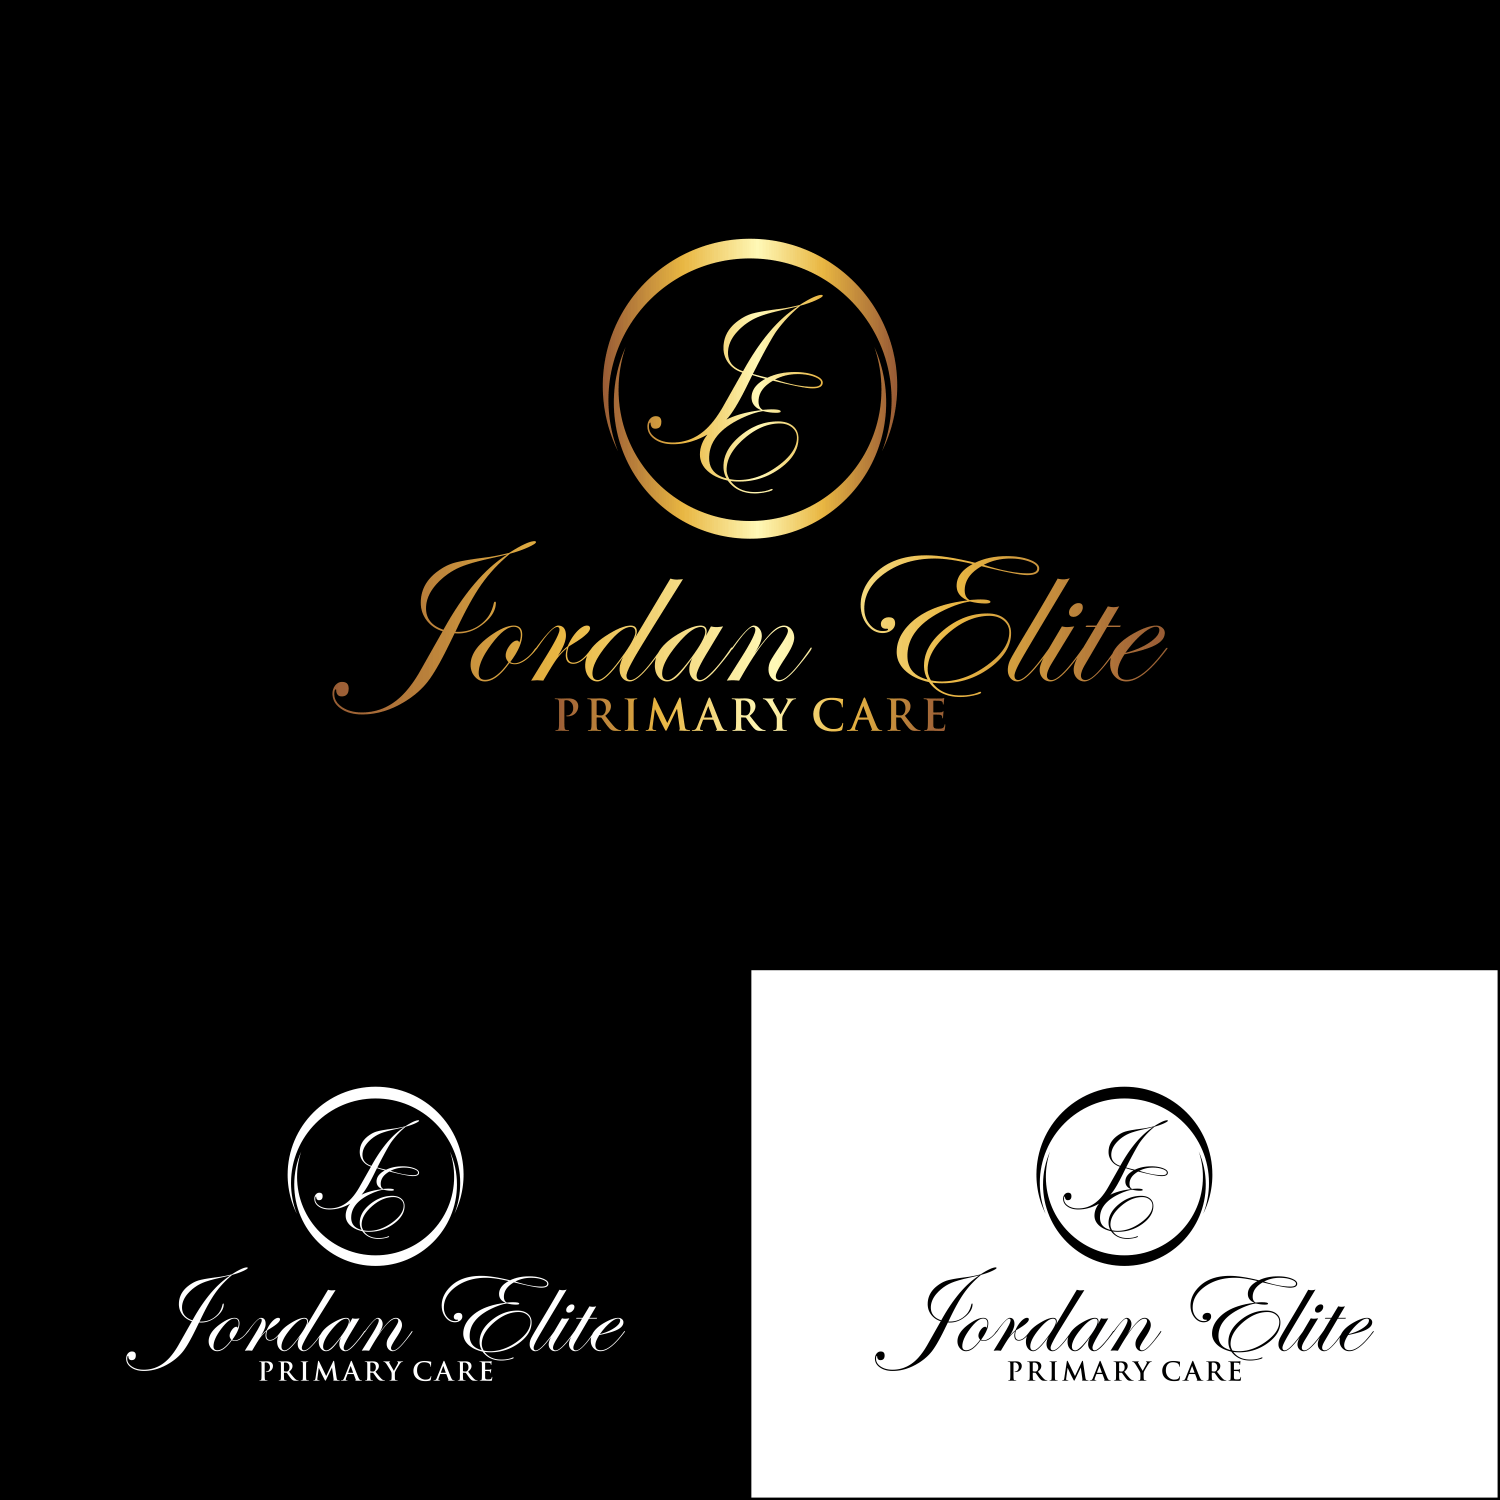 Jordan Elite Logo - Elegant, Traditional, Medical Logo Design for Jordan Elite Primary